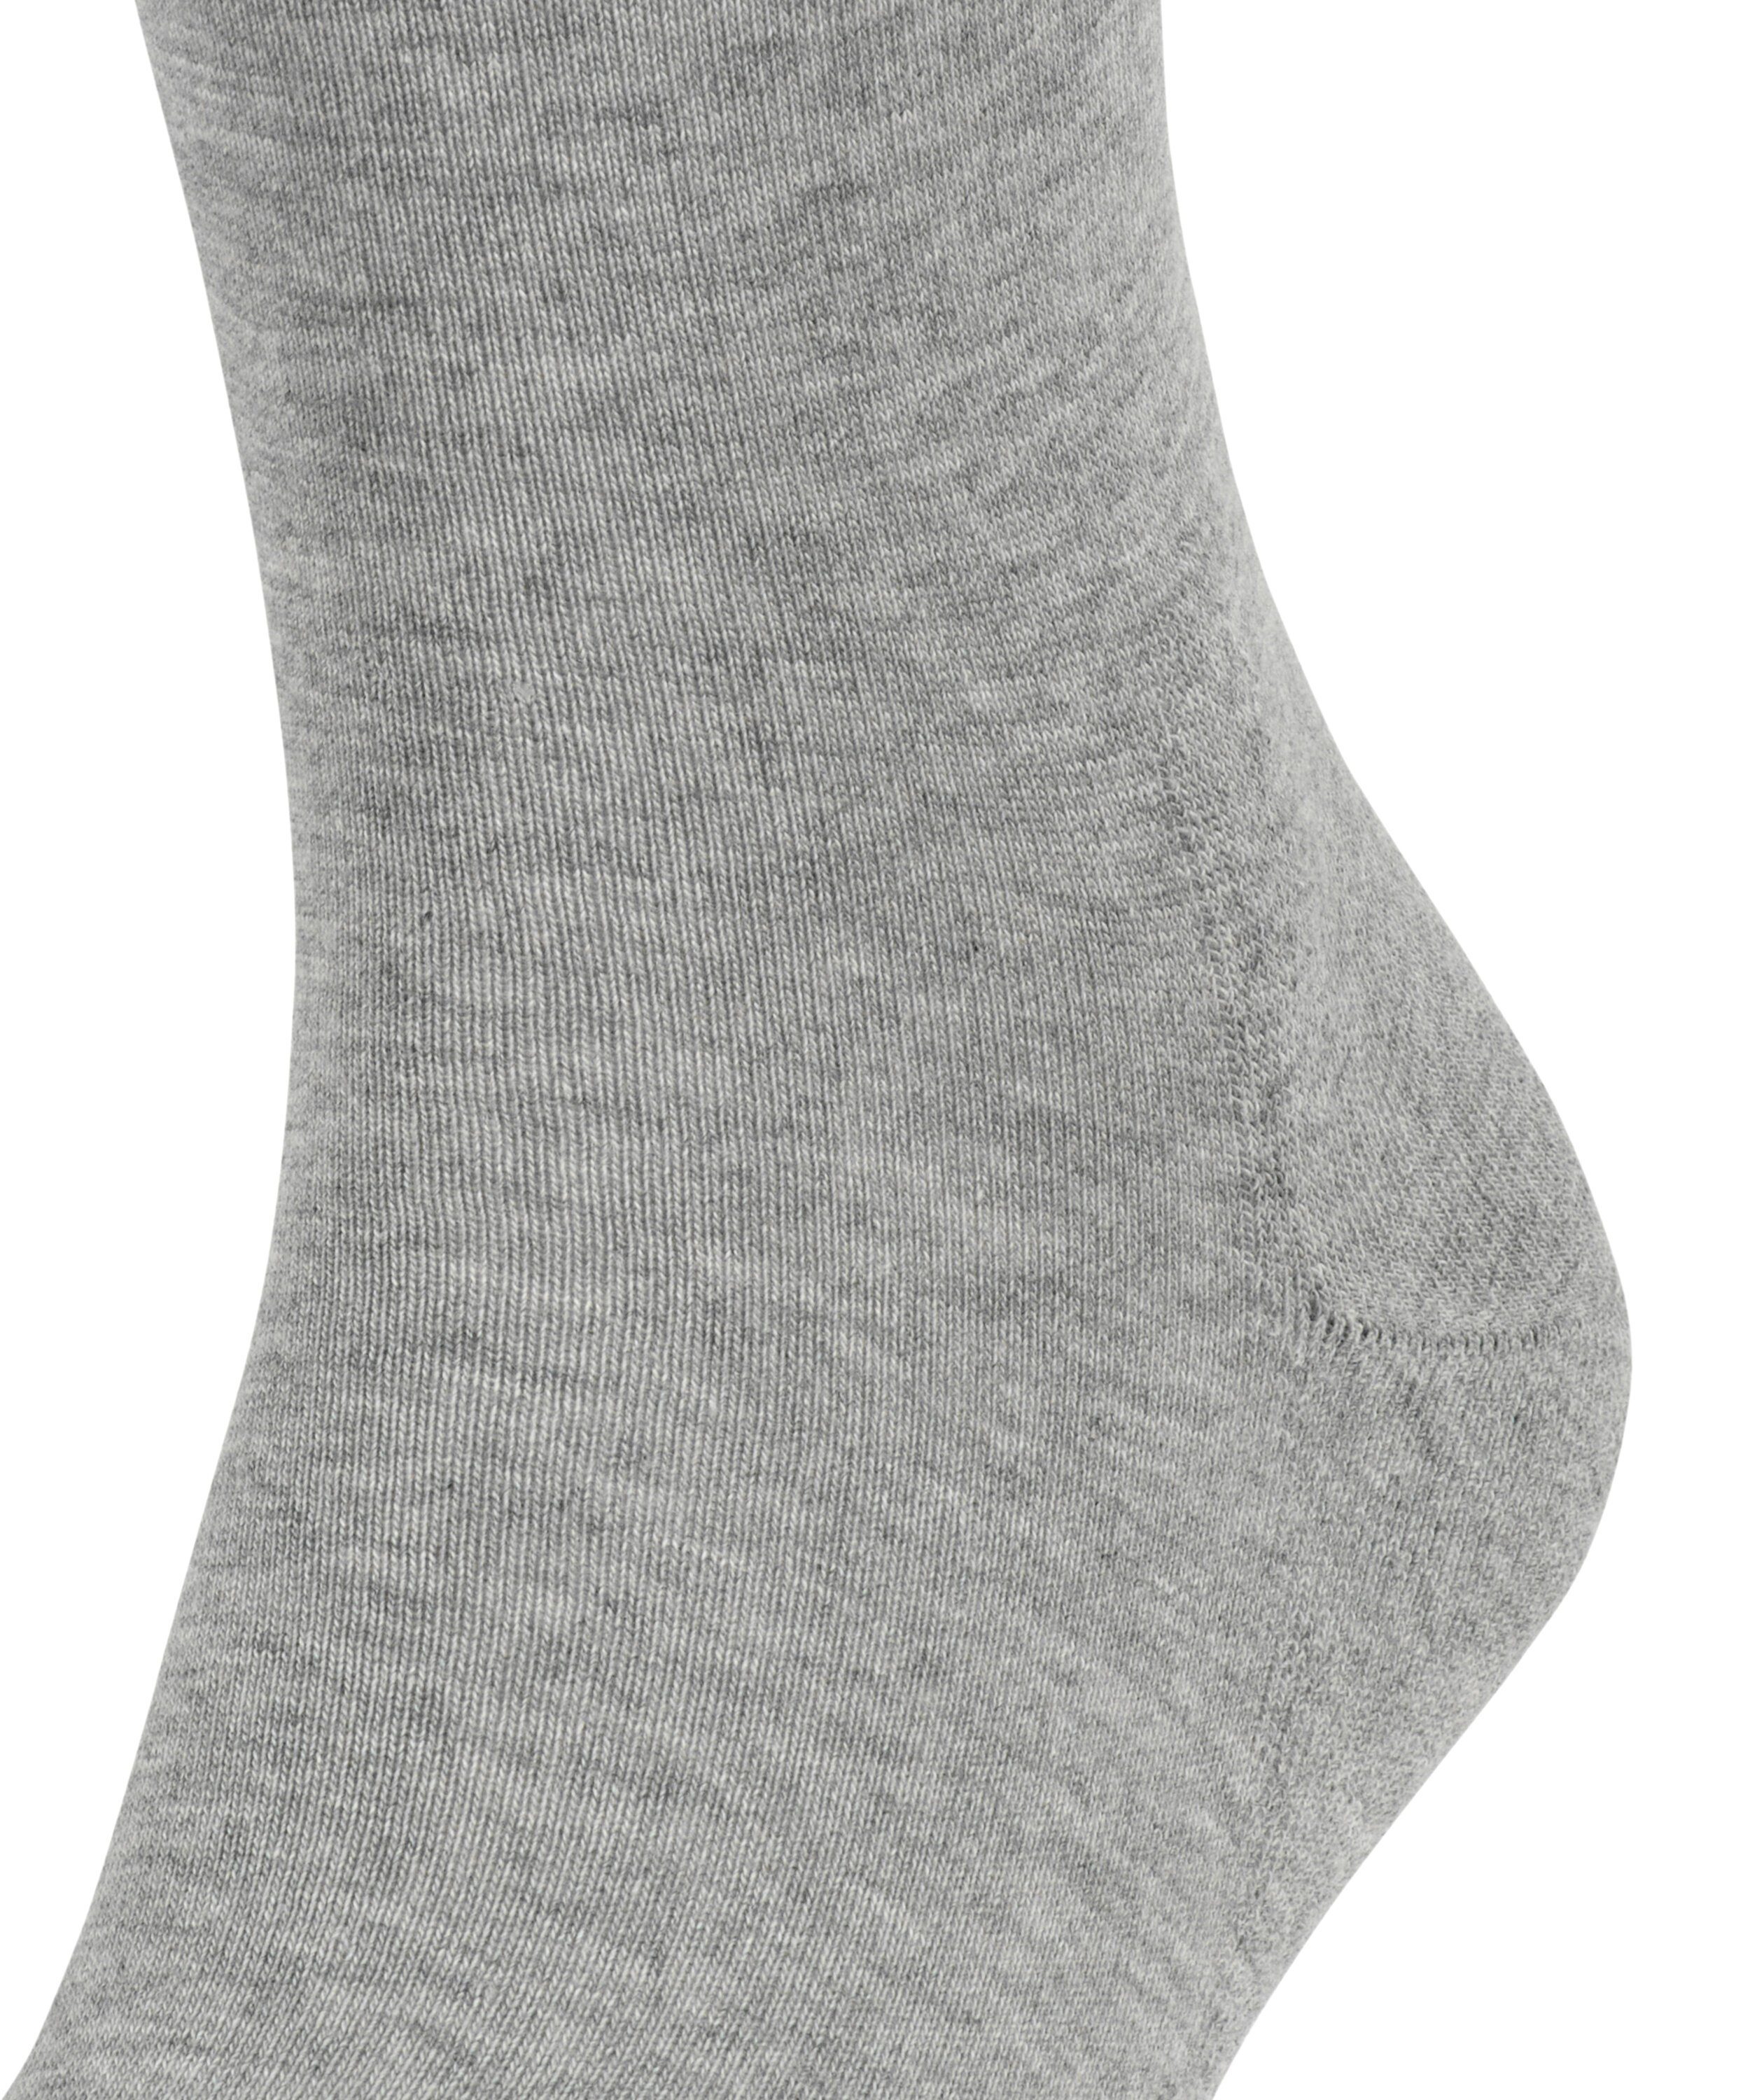 grey (3400) FALKE (1-Paar) Run Socken light